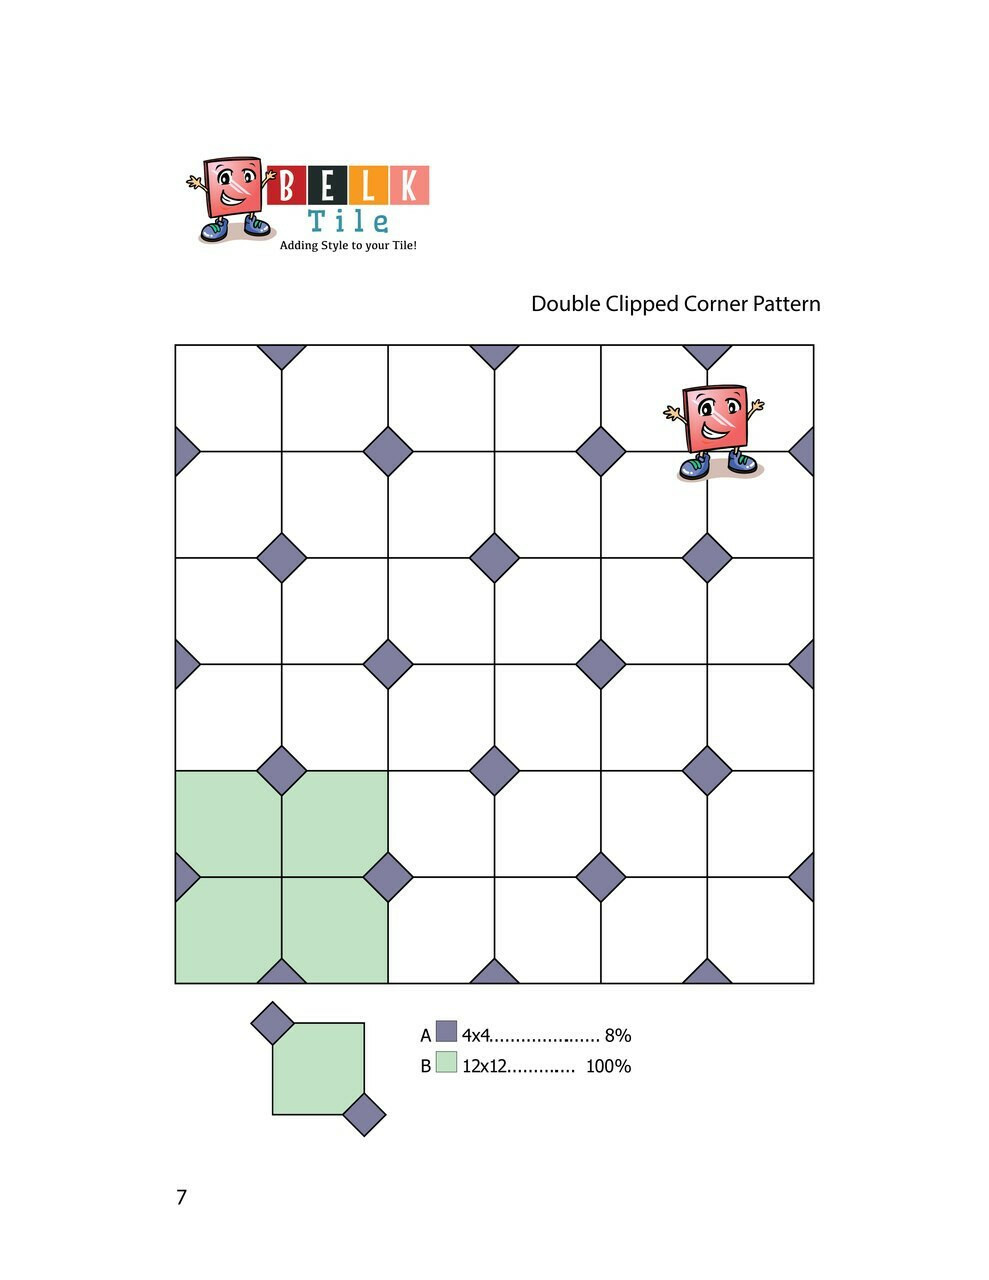 belk-tile-patterns-double-clipped-corner-floor-tile-pattern.jpg